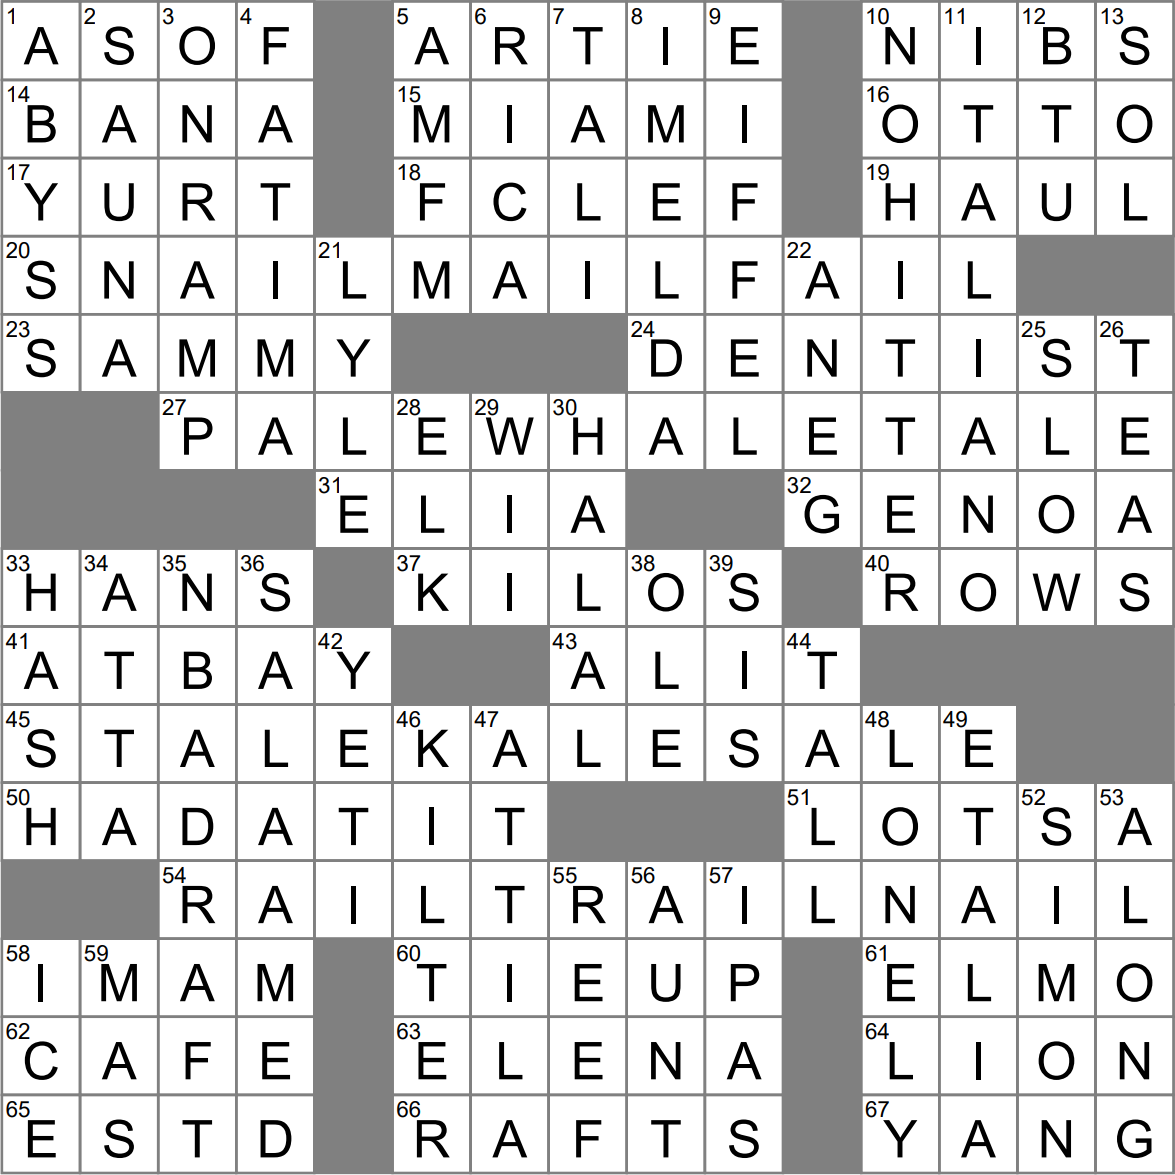 LA Times Crossword 20 Jun 23 Tuesday LAXCrossword com